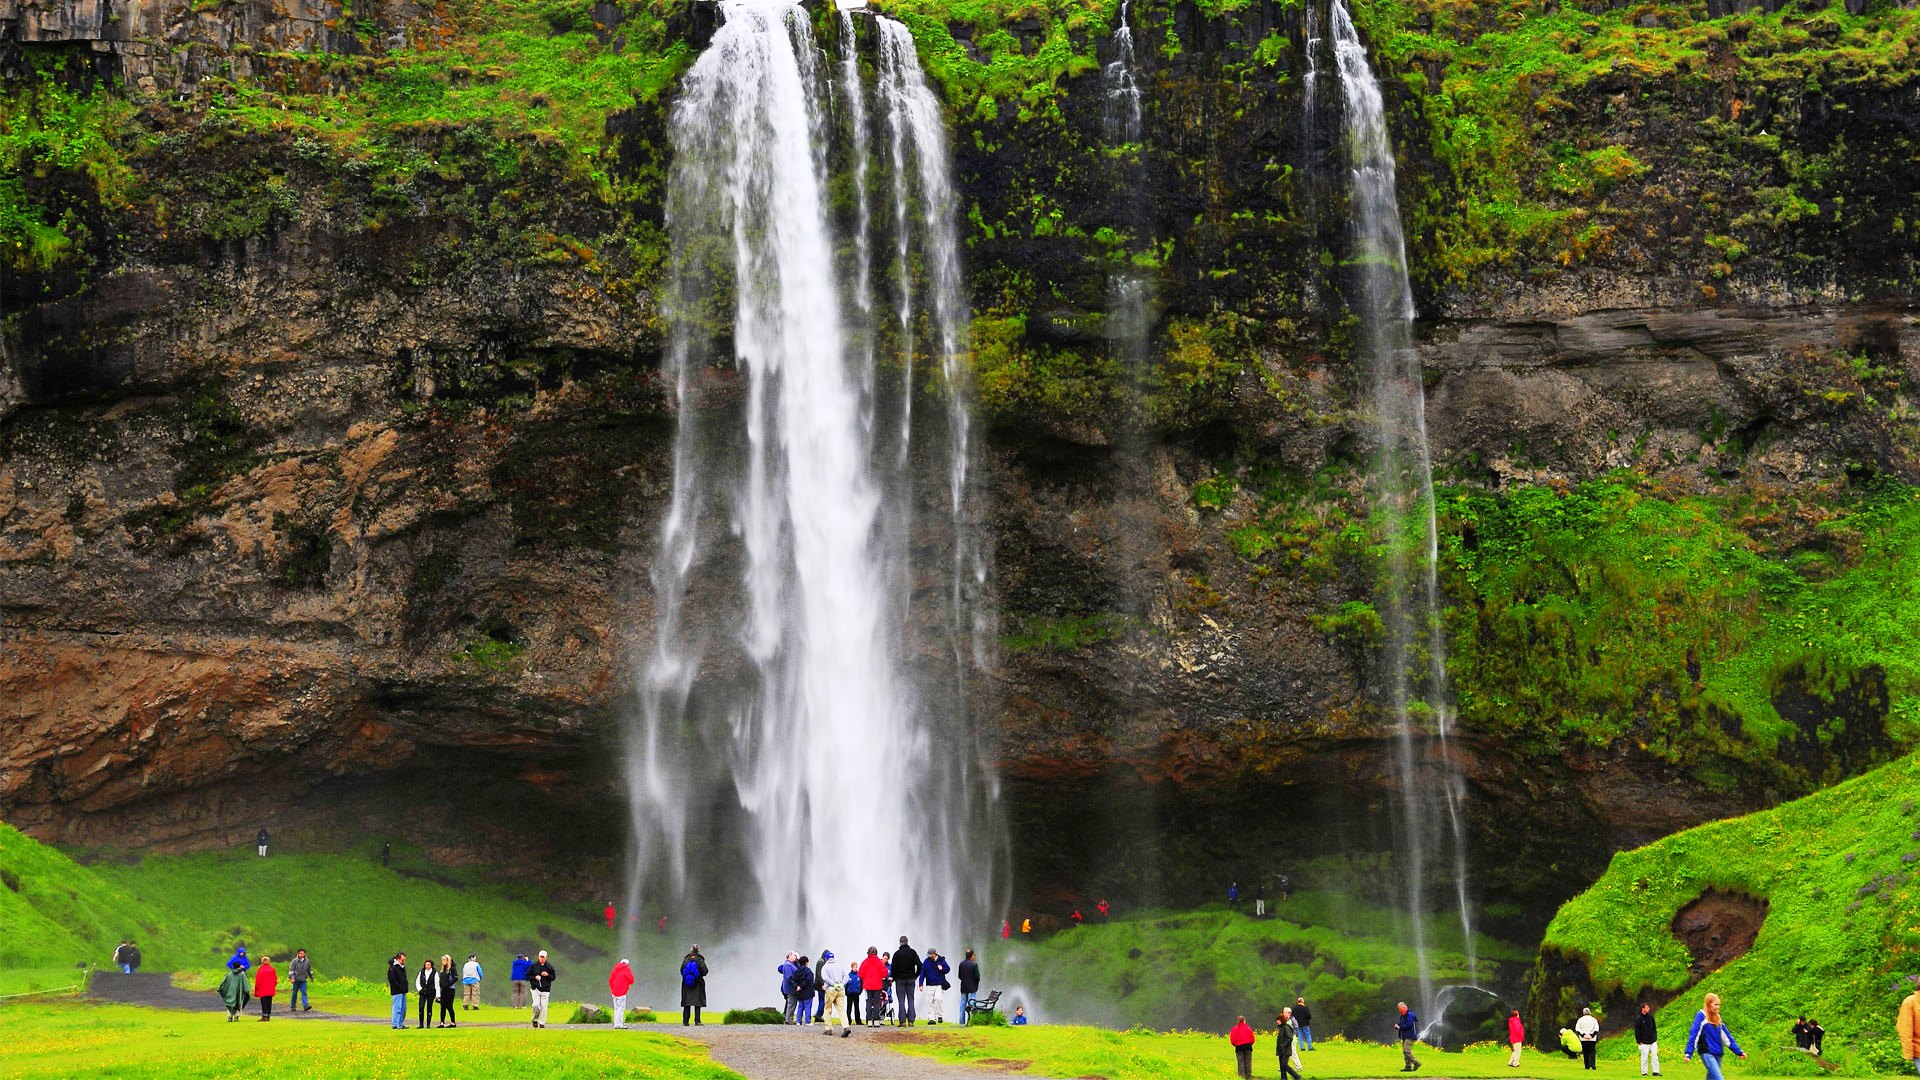 Страна водопадов. Водопад Сельяландфосс, Исландия. Водопад Сельяландсфосс (Seljalandsfoss Waterfall), Исландия. Водопады Боума. Водопад Меркьярфосс.